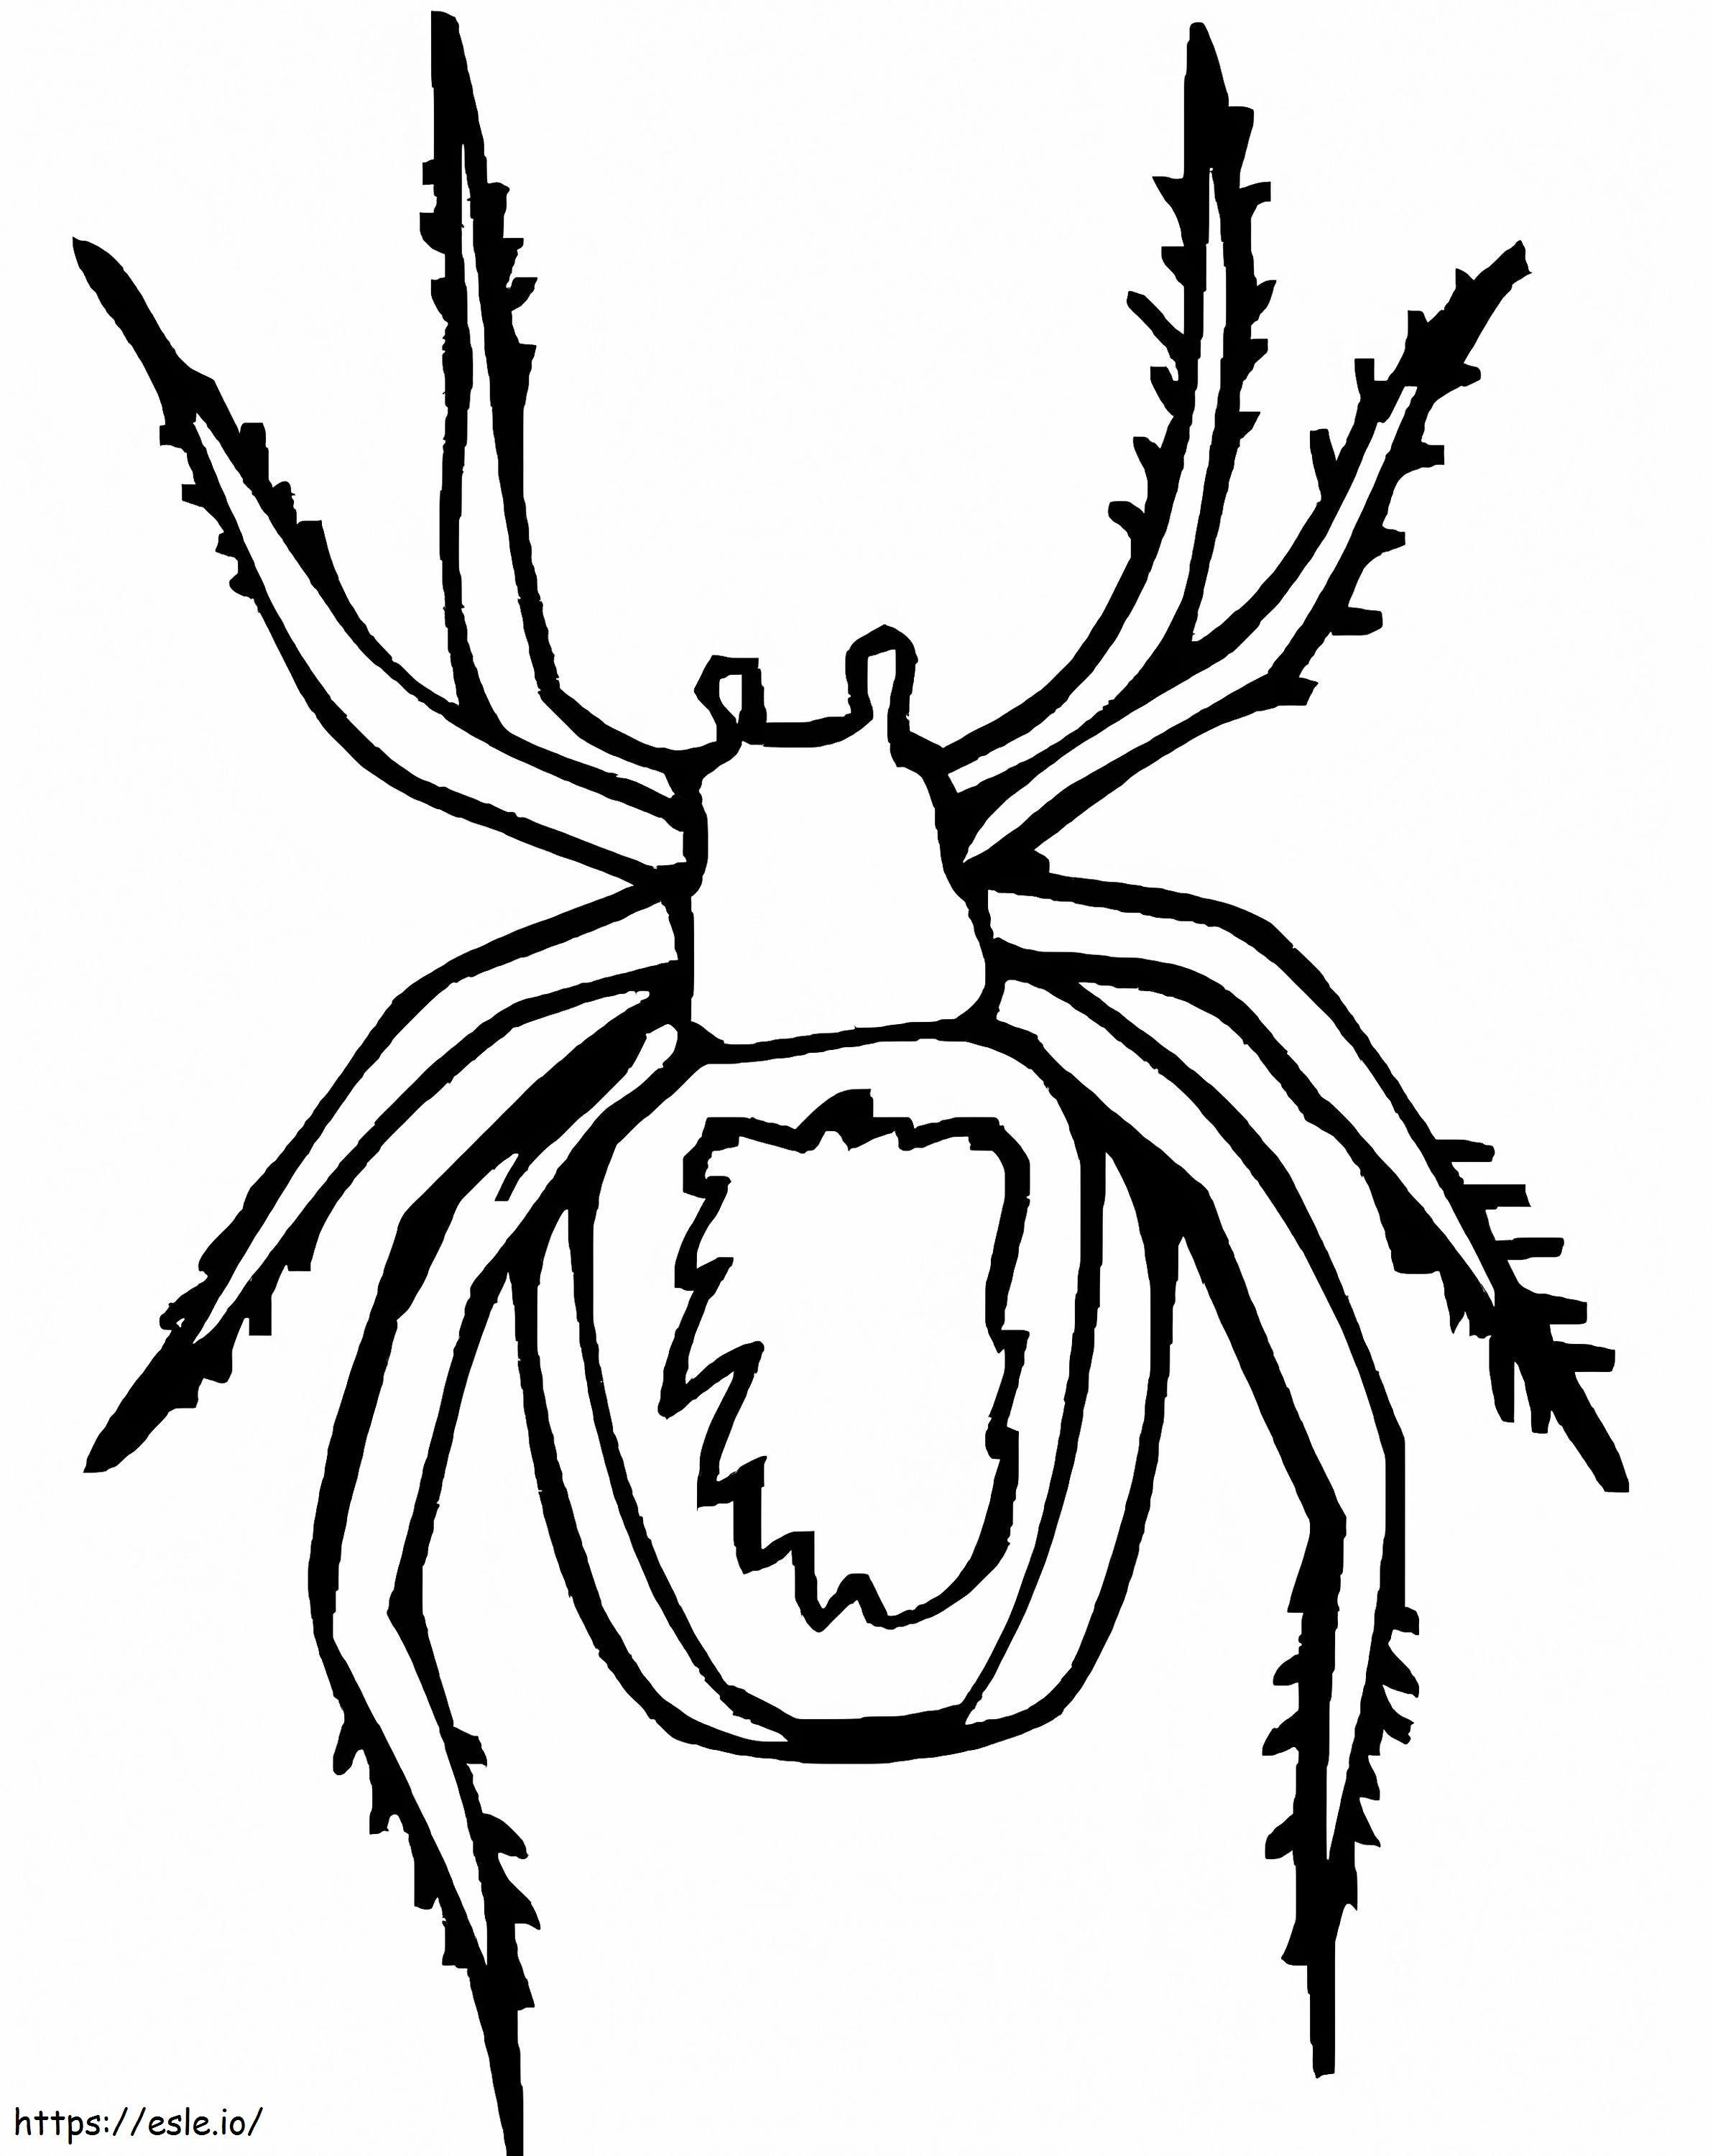 Spinne 3 ausmalbilder